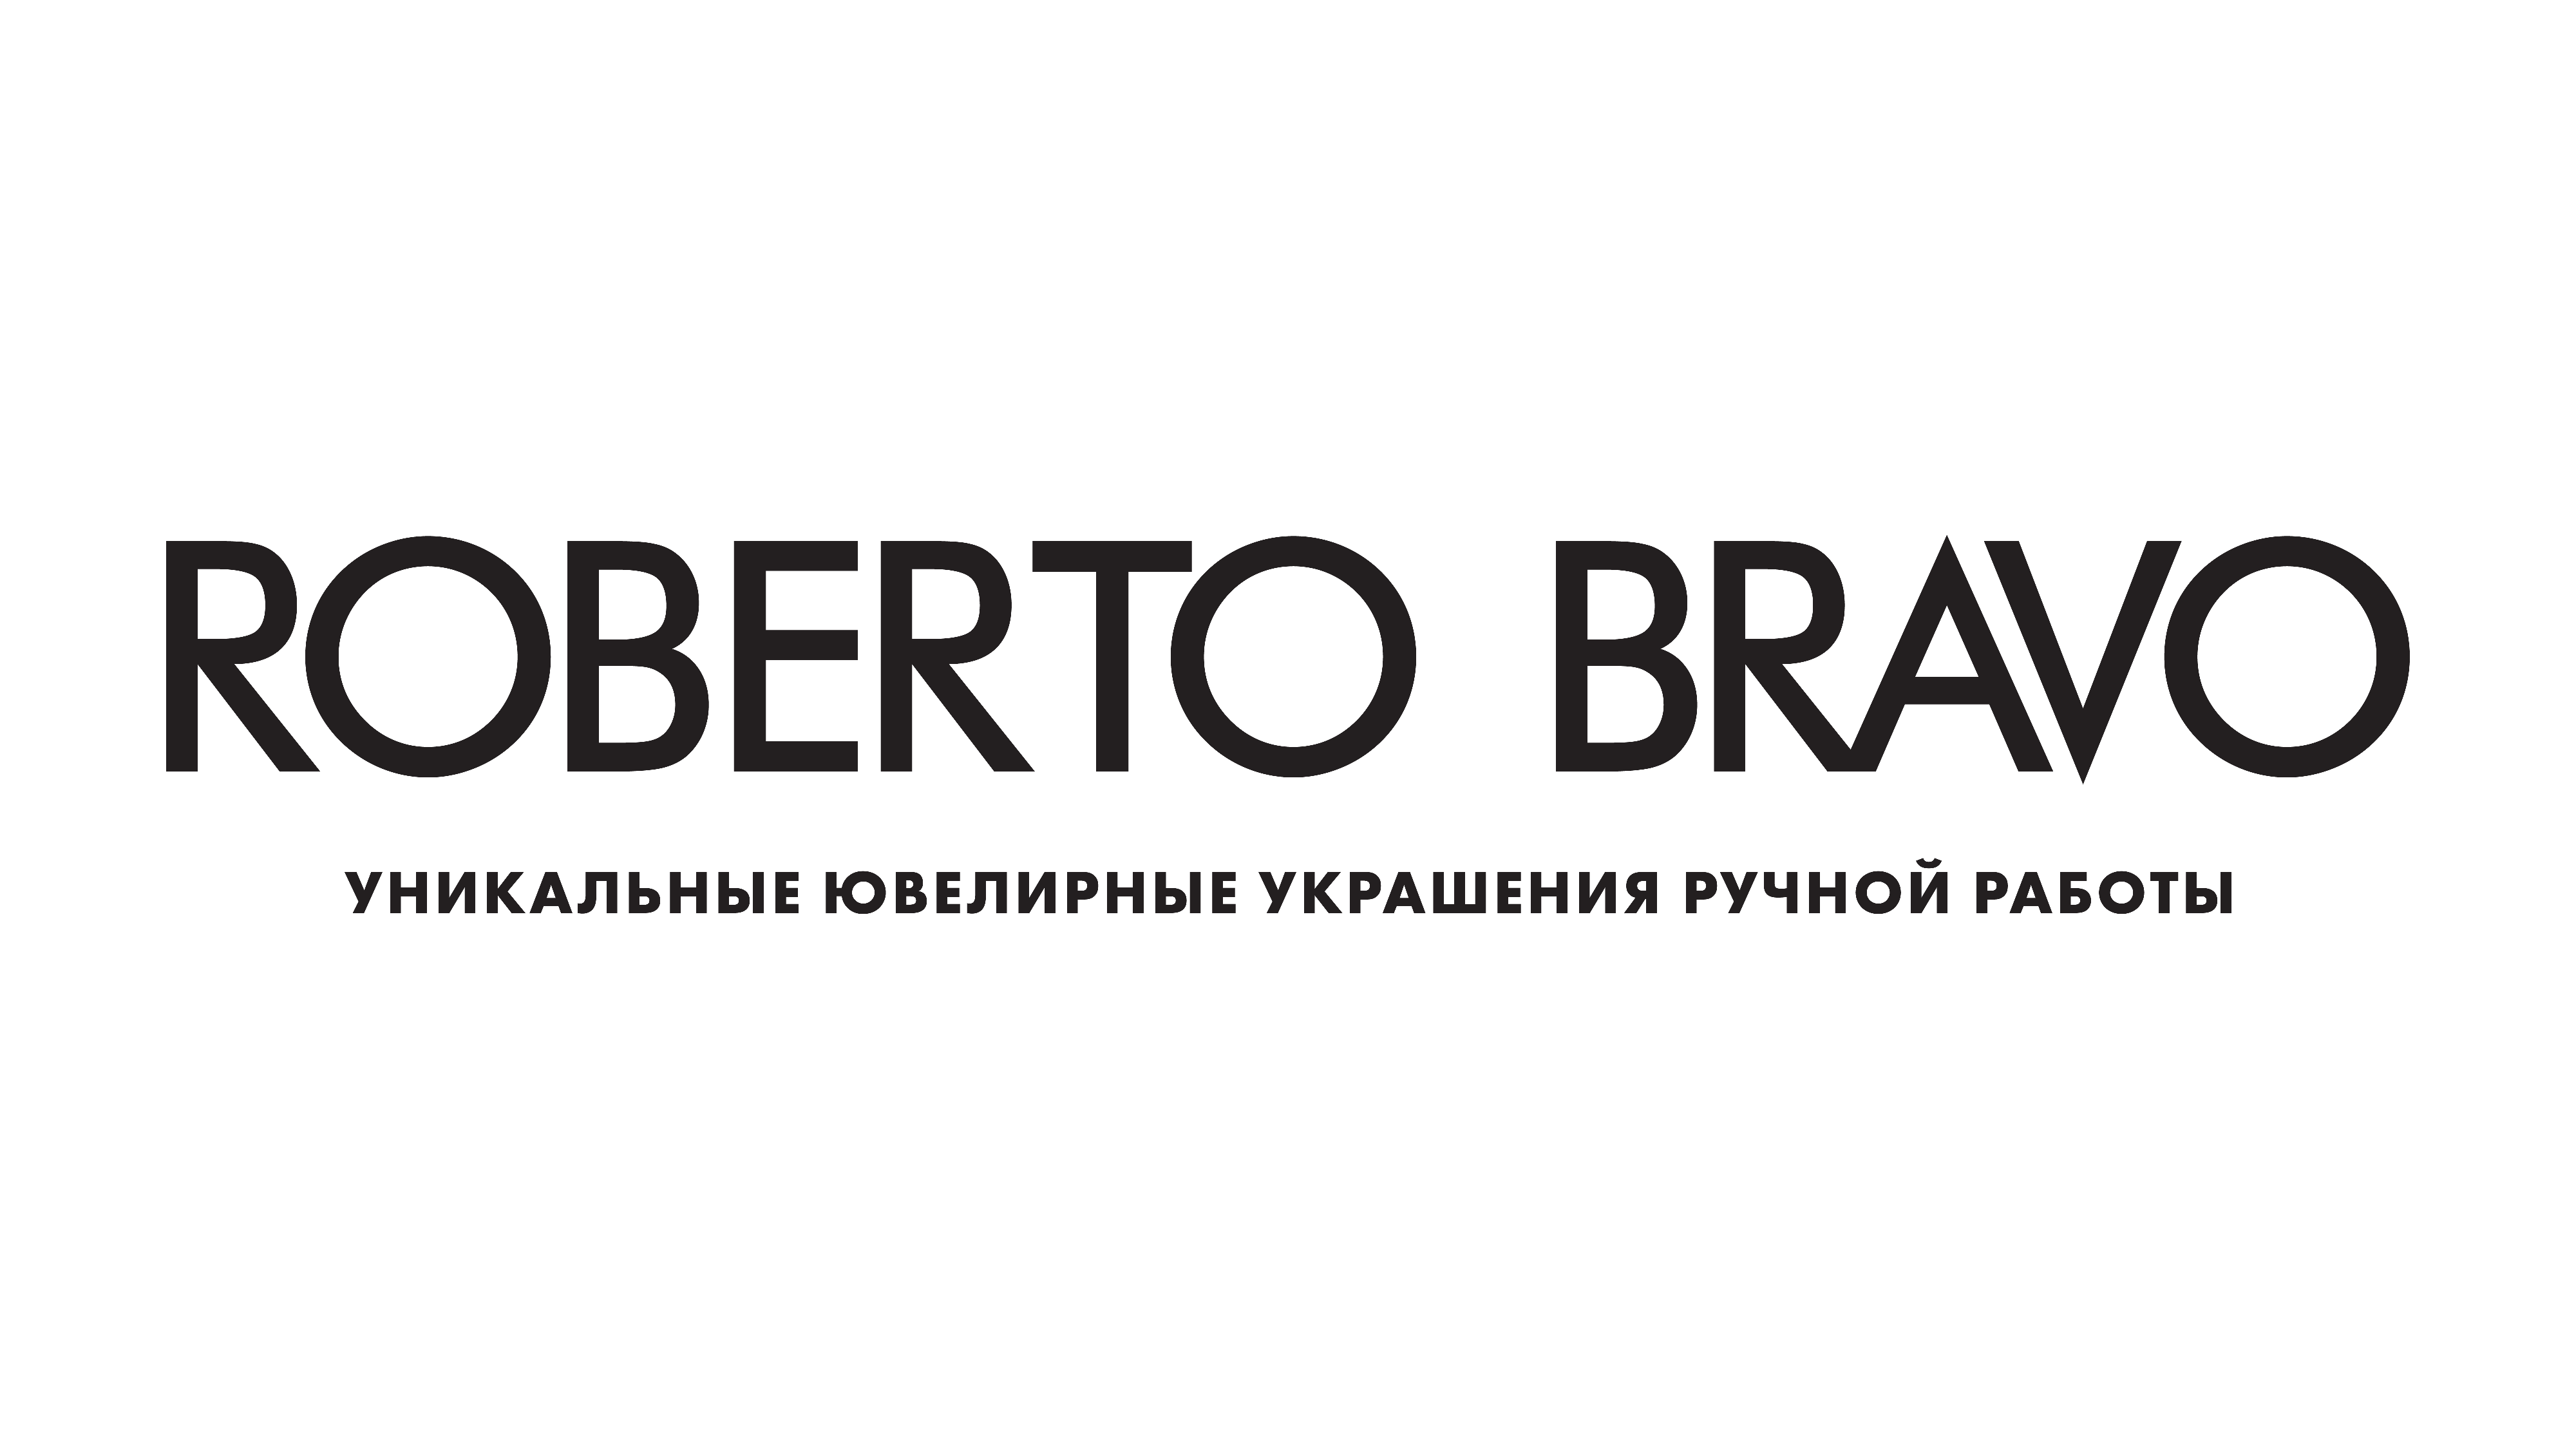 ROBERTO BRAVO-logo